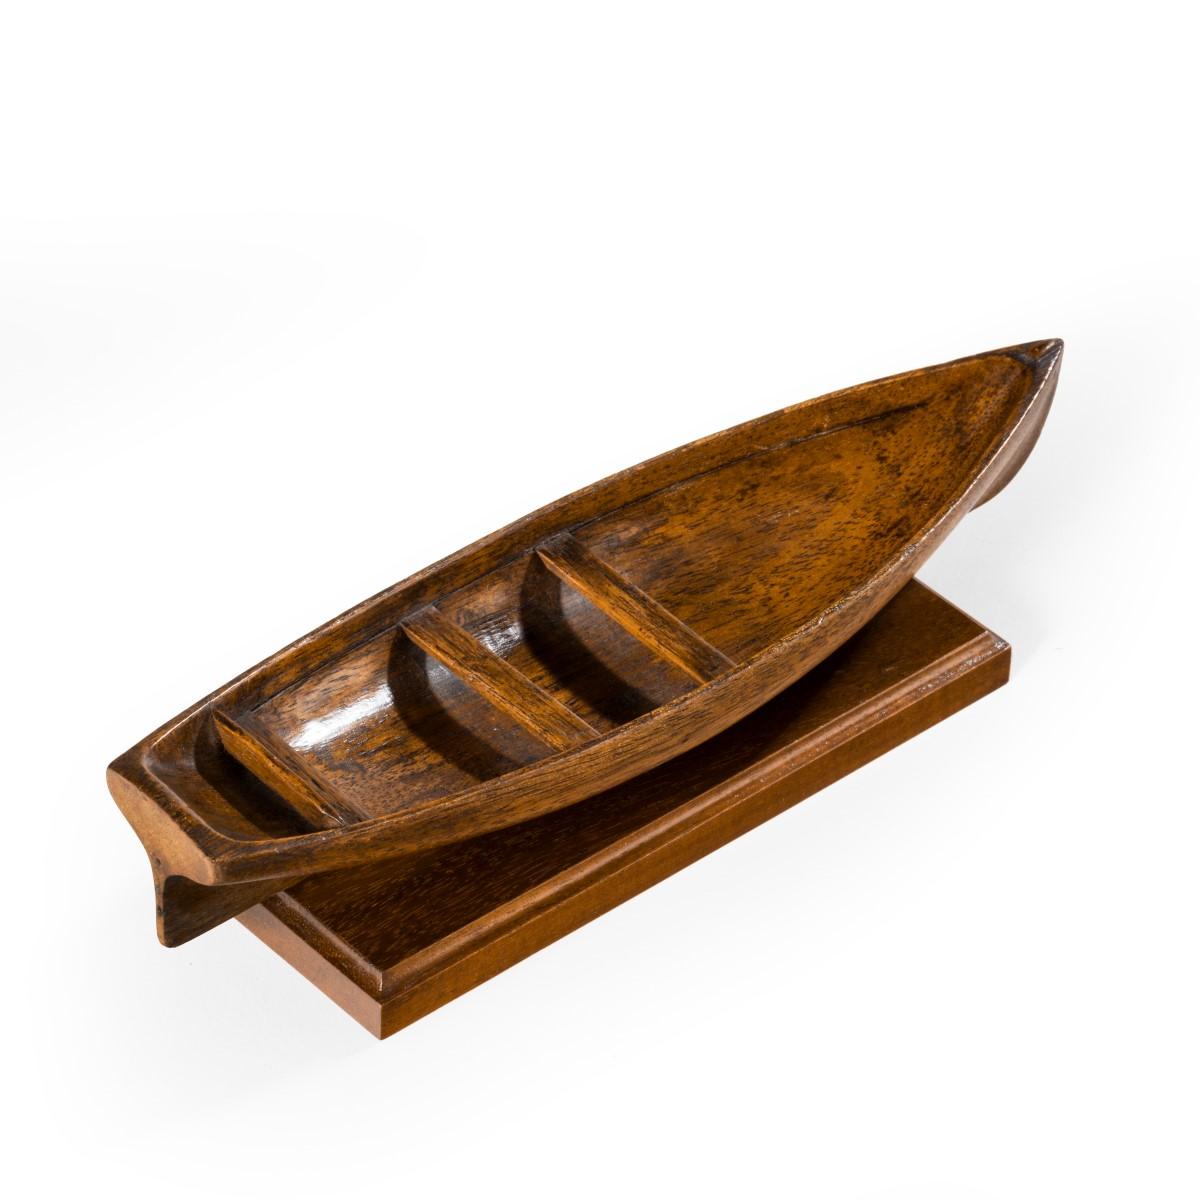 A late Victorian mahogany rowing boat model